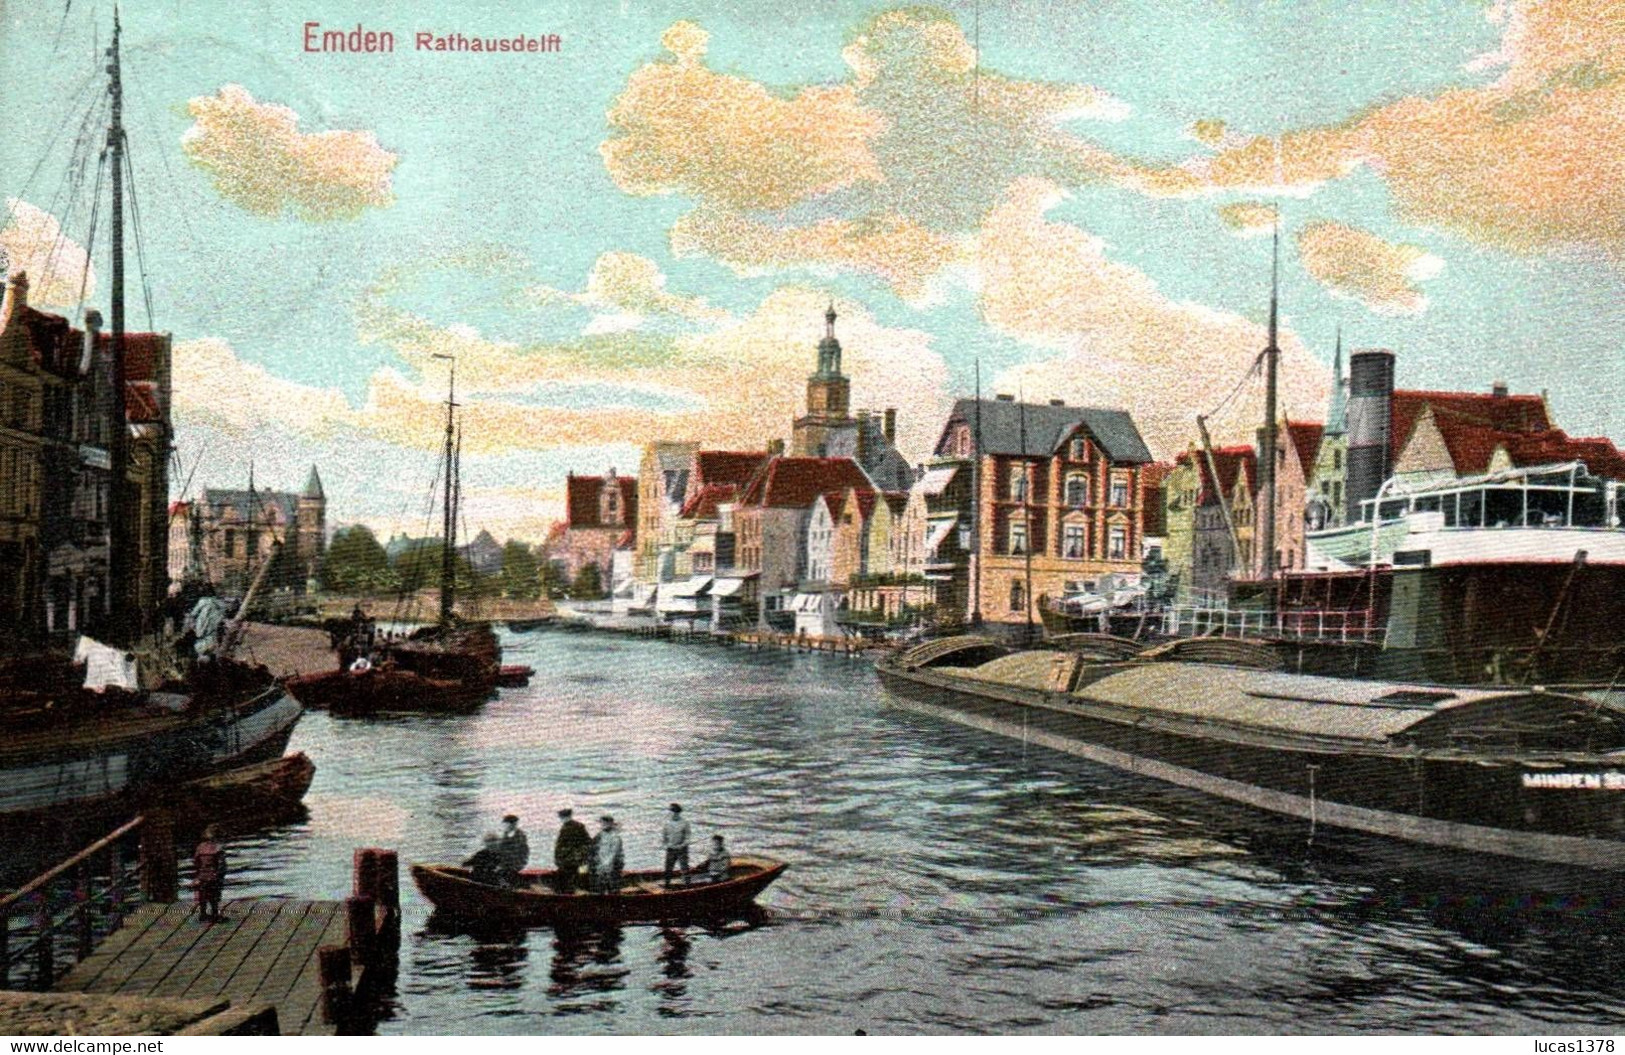 EMDEN / RATHAUSDELFT - Emden